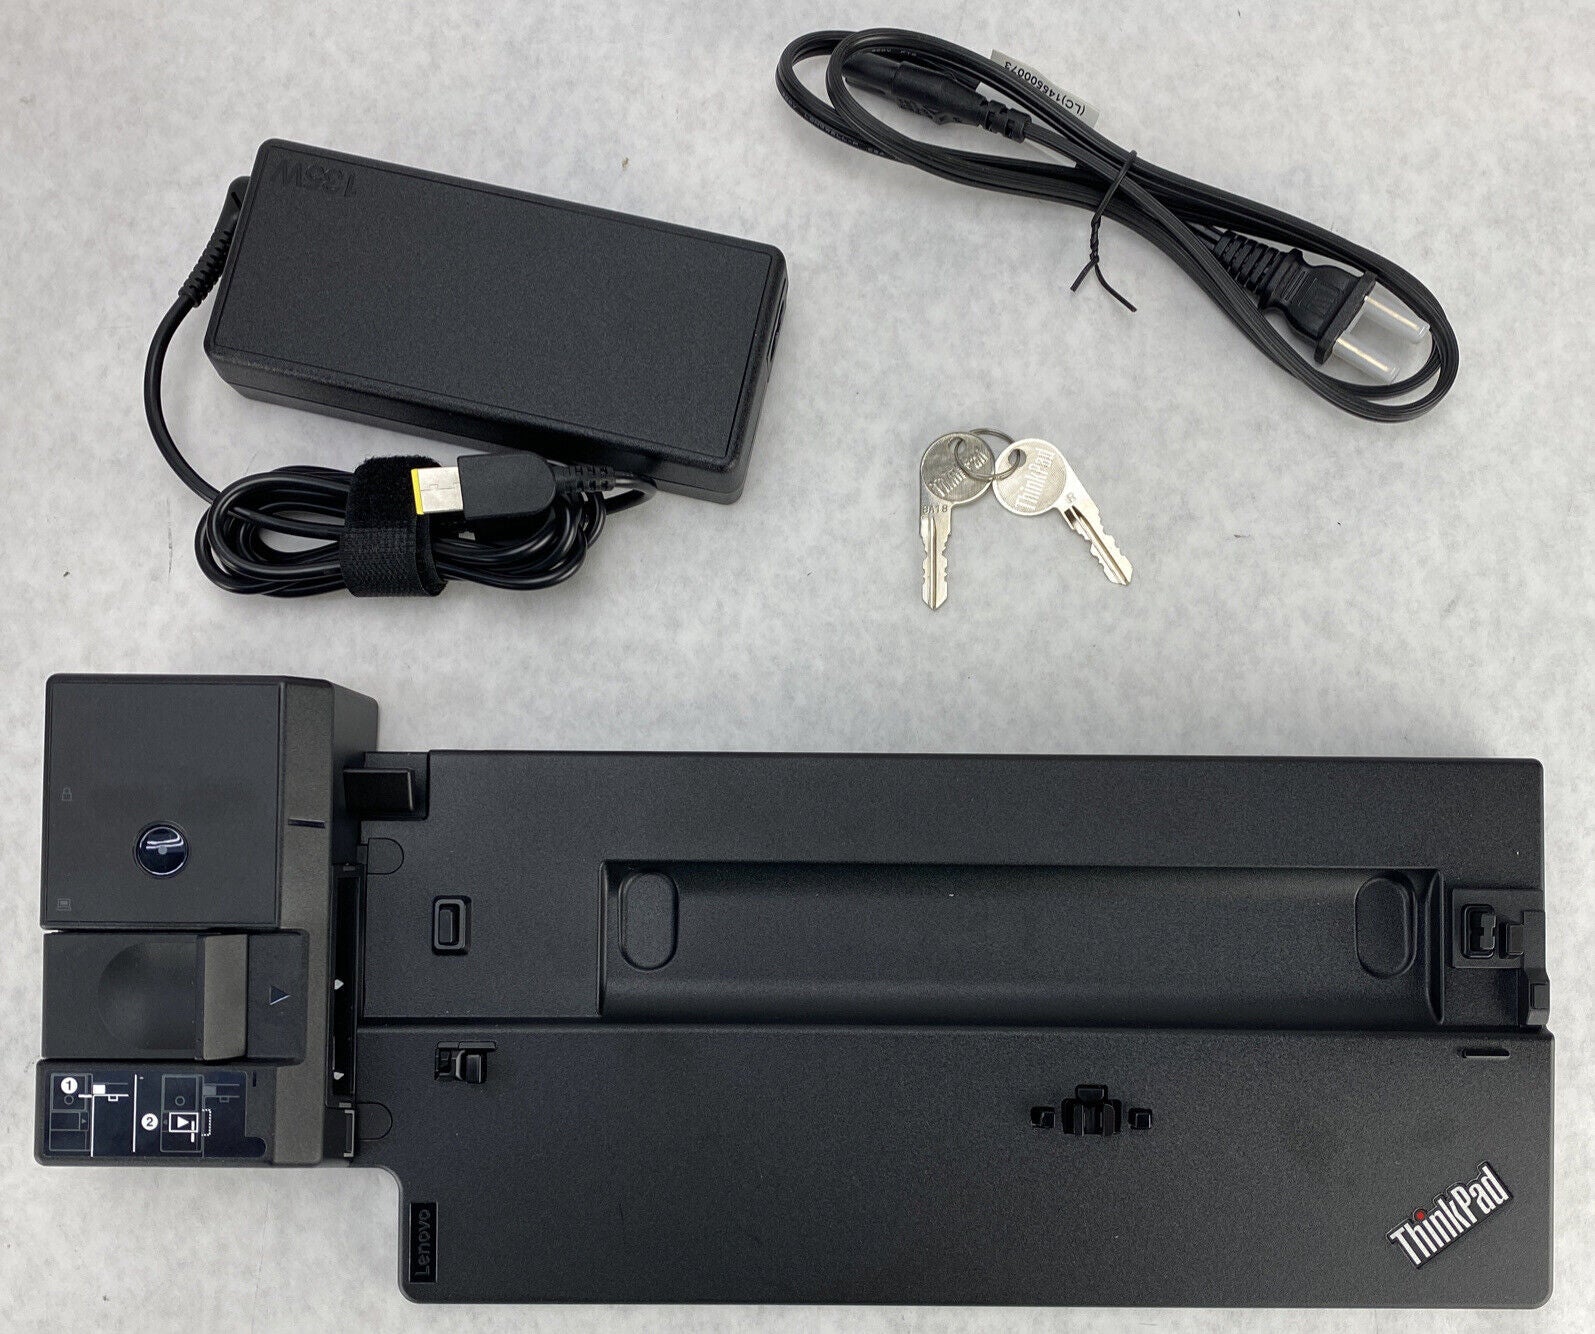 Lenovo 40AJ0135US ThinkPad 135w Ultra Docking Station + AC Adapter